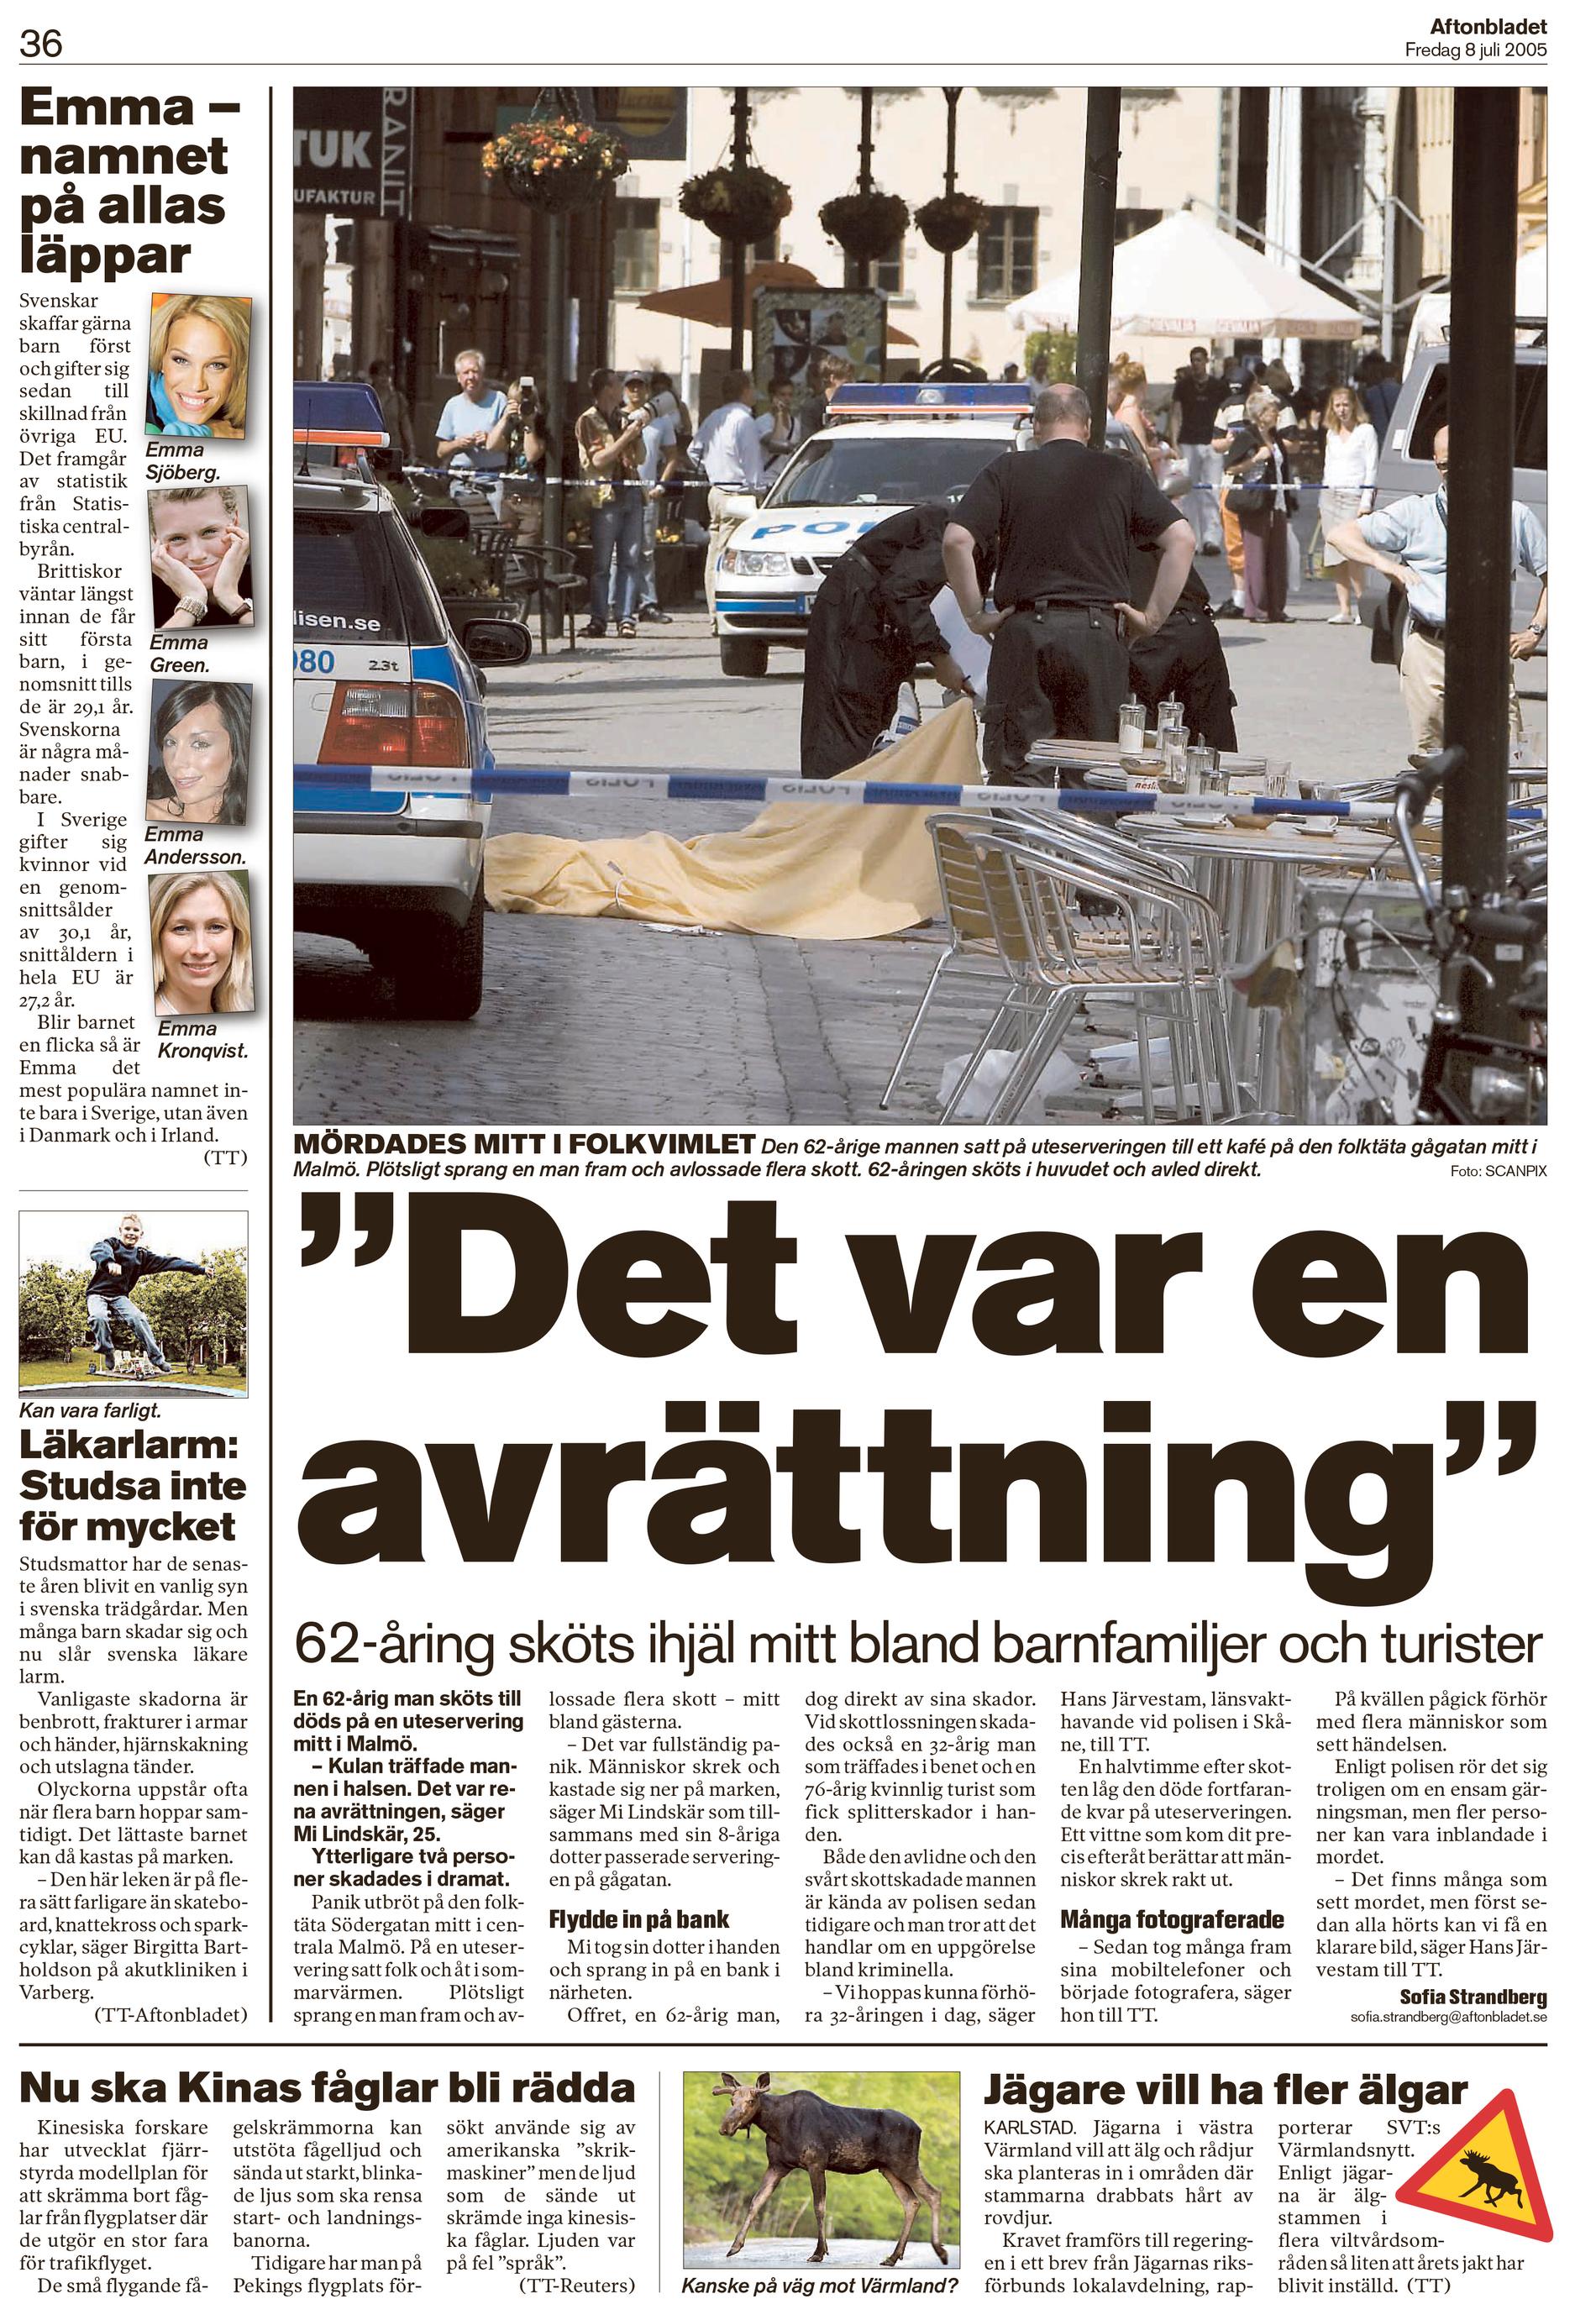 Aftonbladets printupplaga den 8 juli 2005.